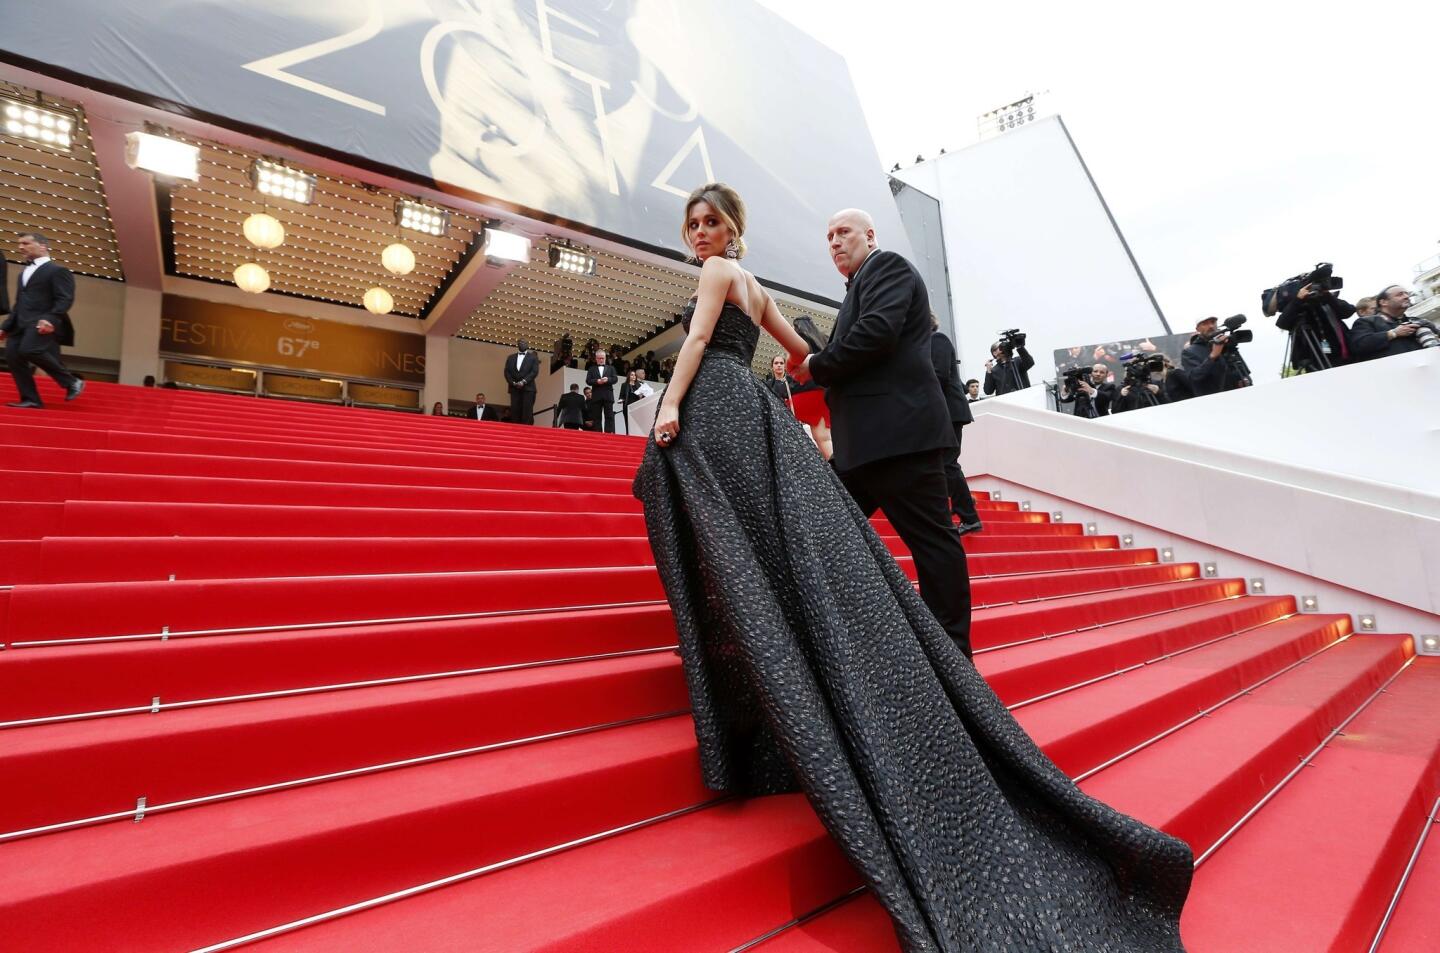 Cannes 2014: Scene